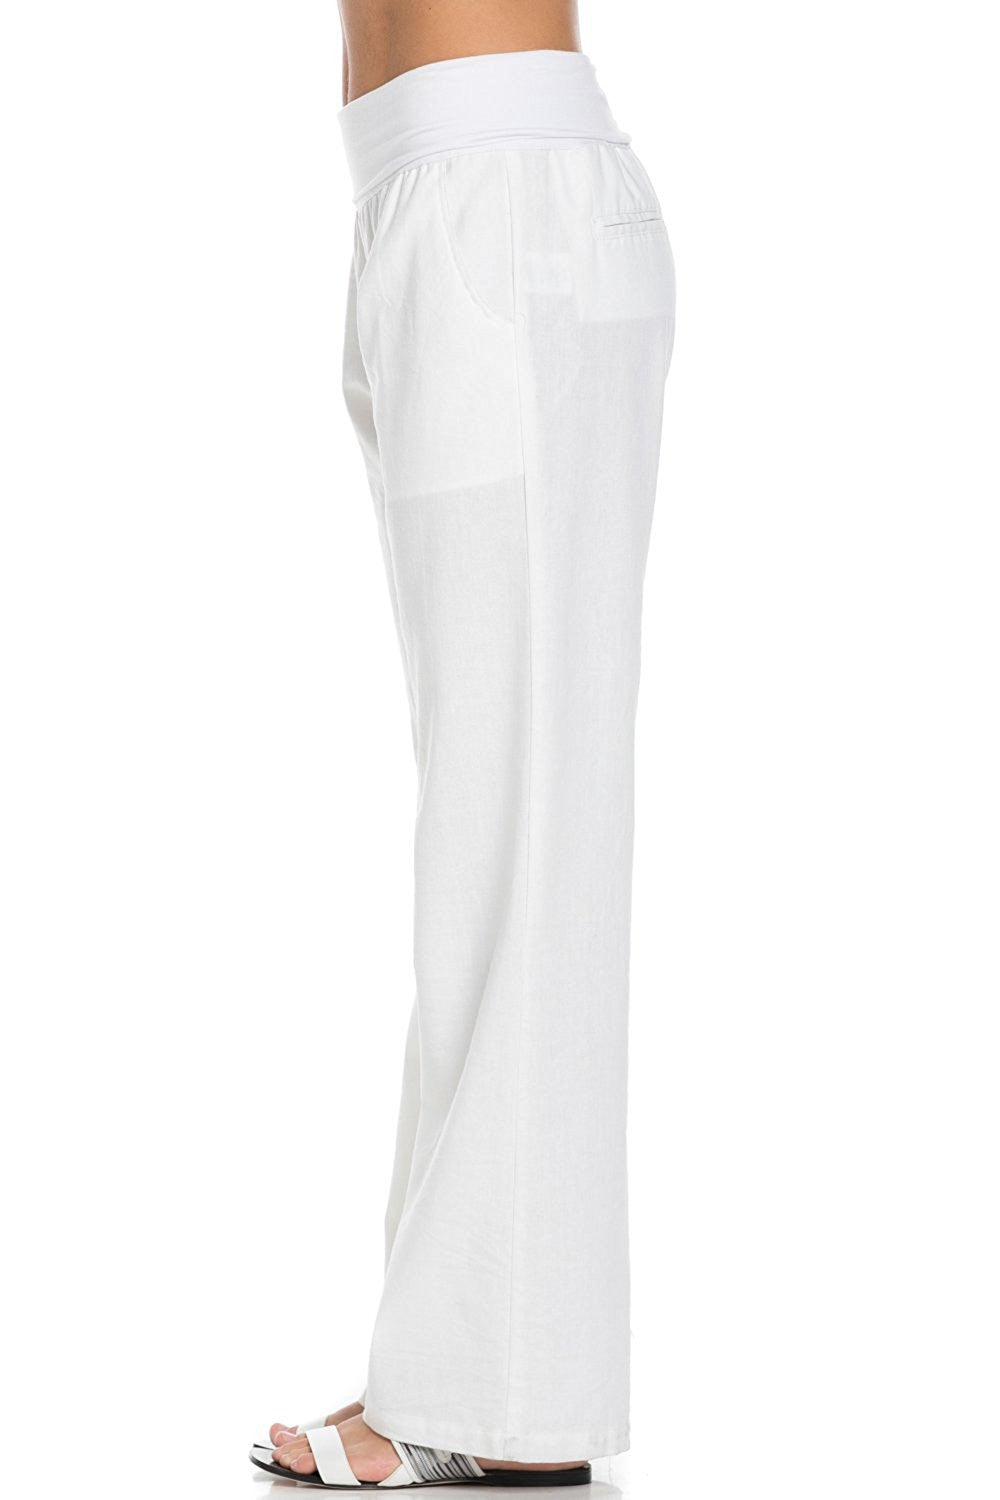 Comfy Fold Over Linen Pants (White) - Poplooks